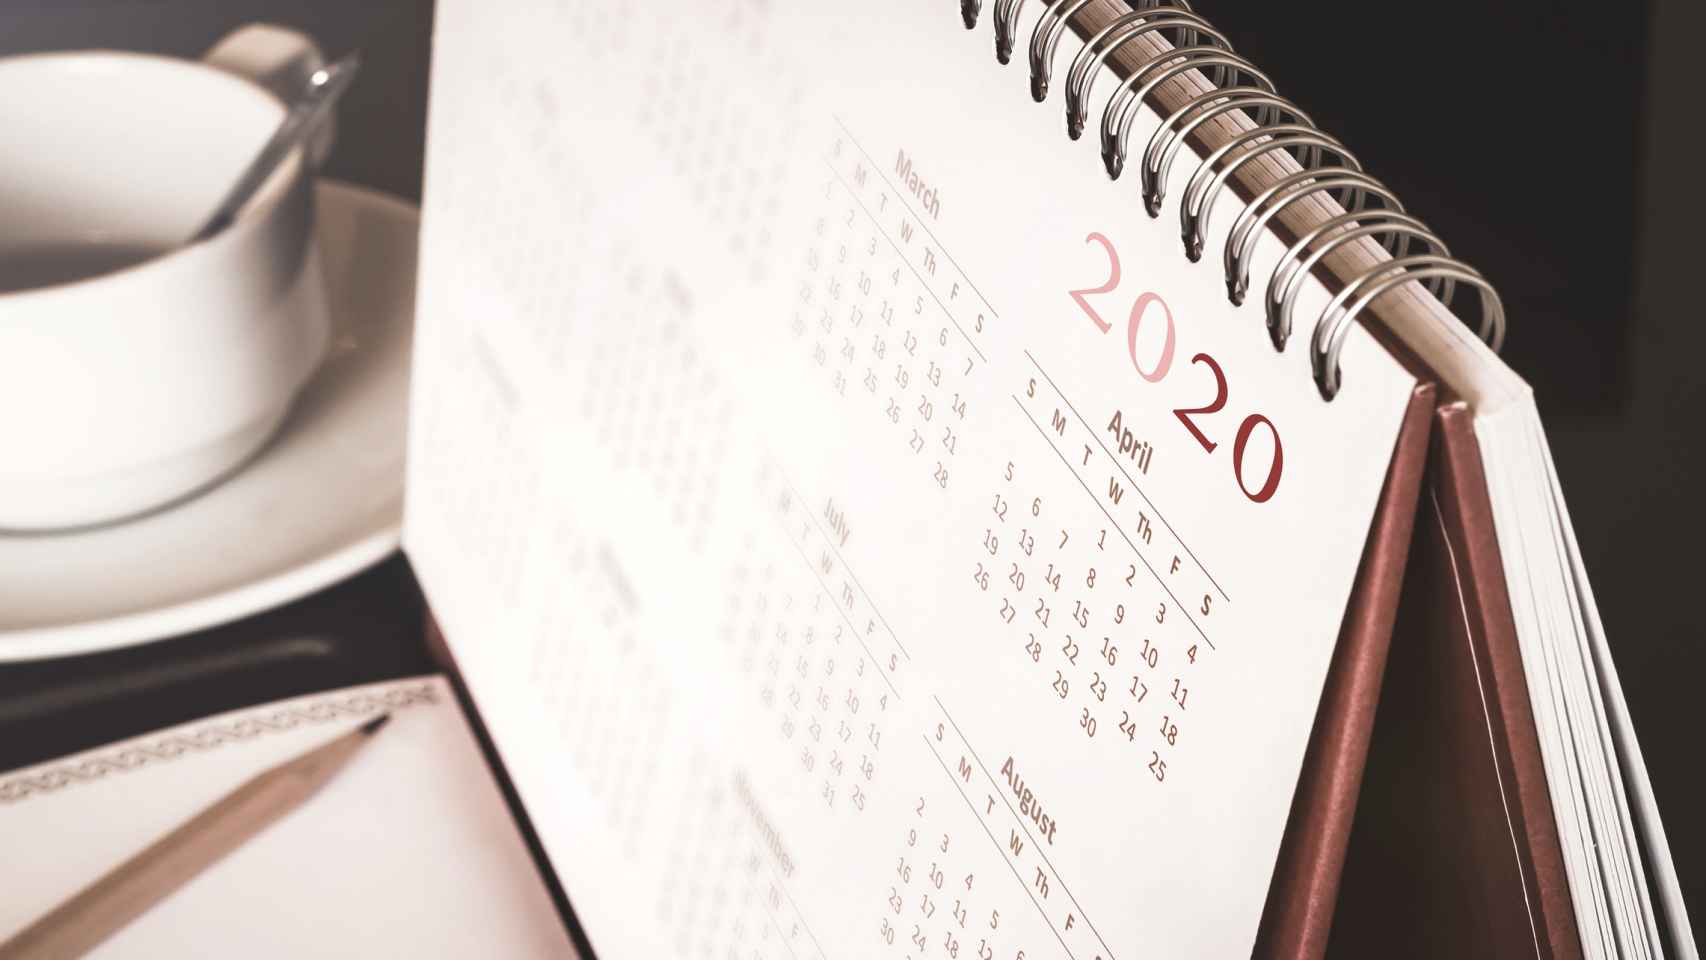 Organiza tus días con estos calendarios de papel 2020/2021